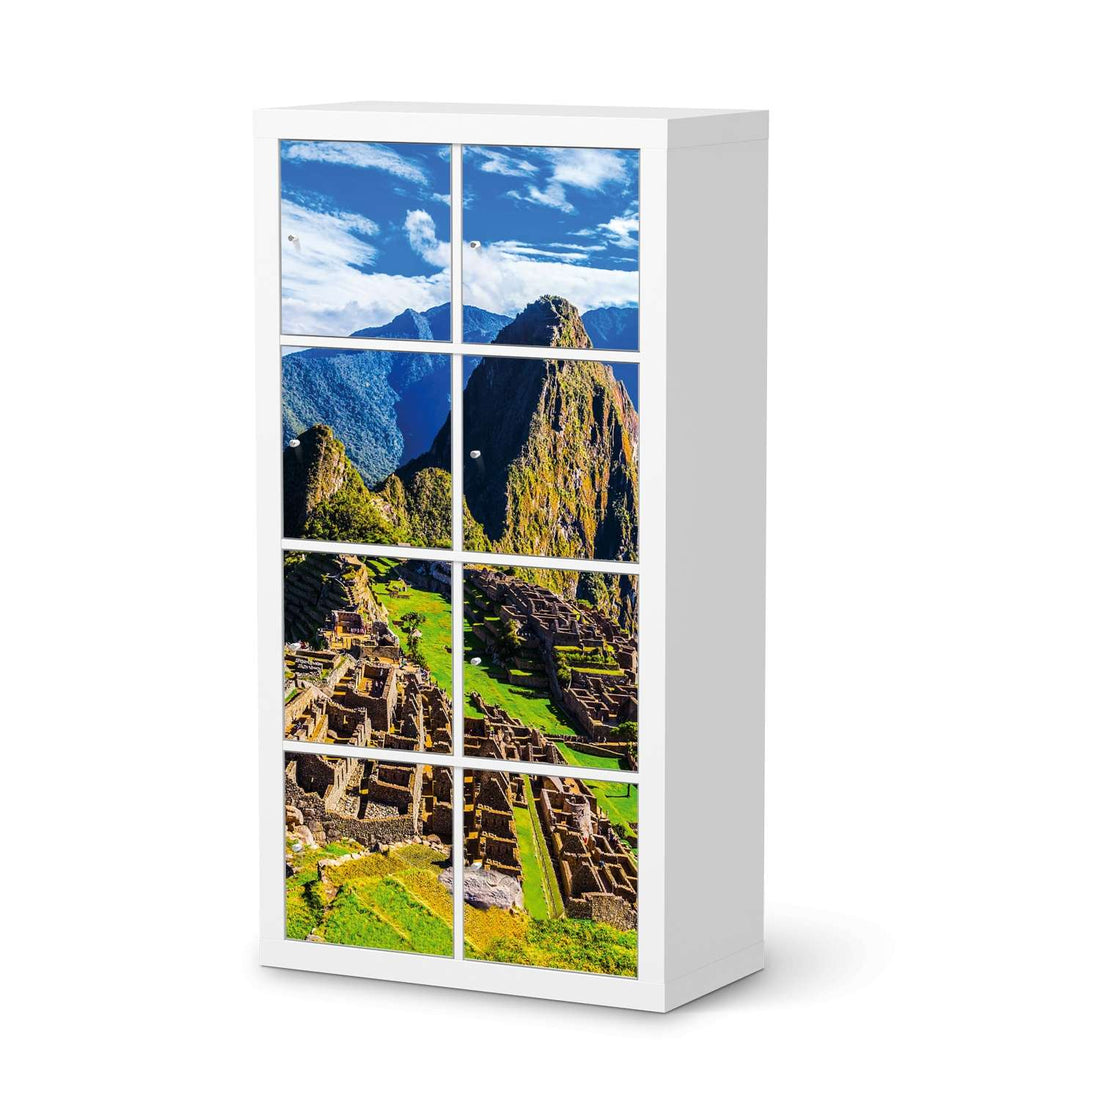 Folie für Möbel Machu Picchu - IKEA Kallax Regal 8 Türen  - weiss